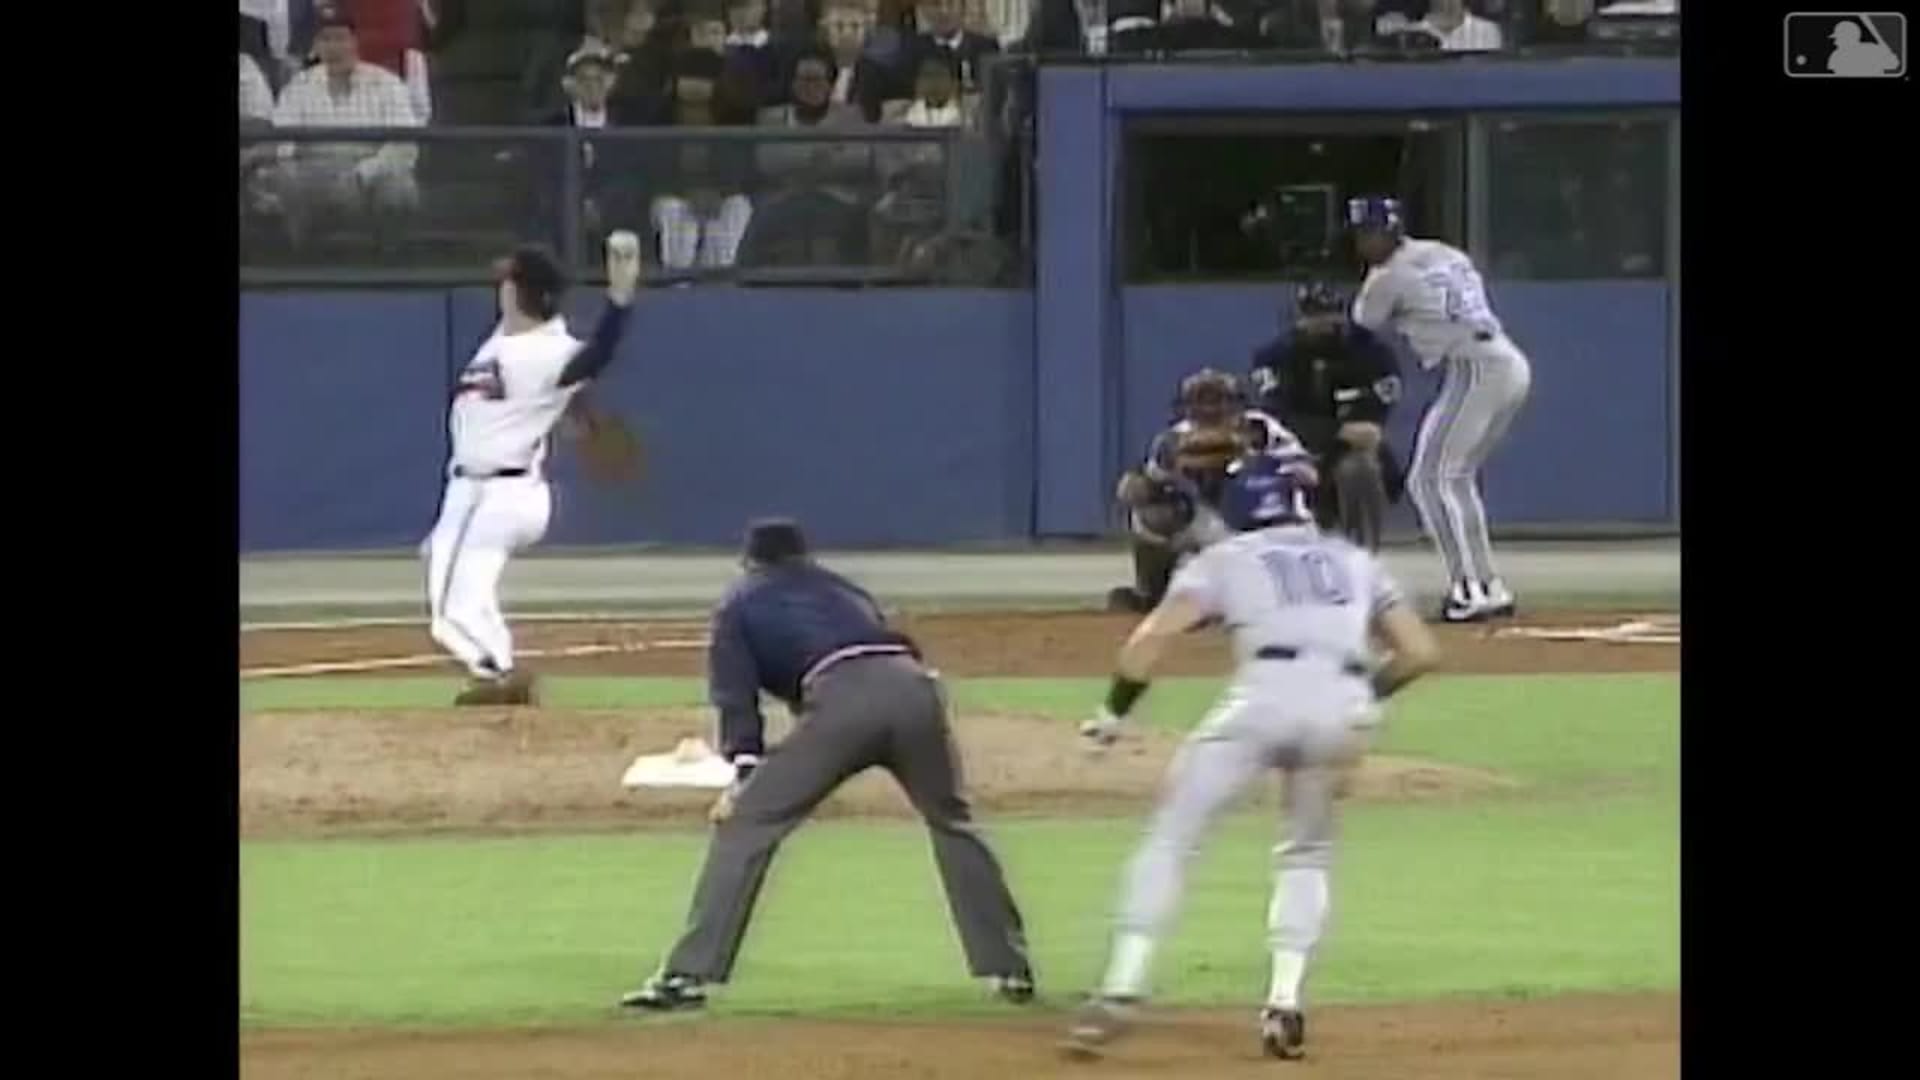 TBT: Reliving Deion Sanders' baseball career